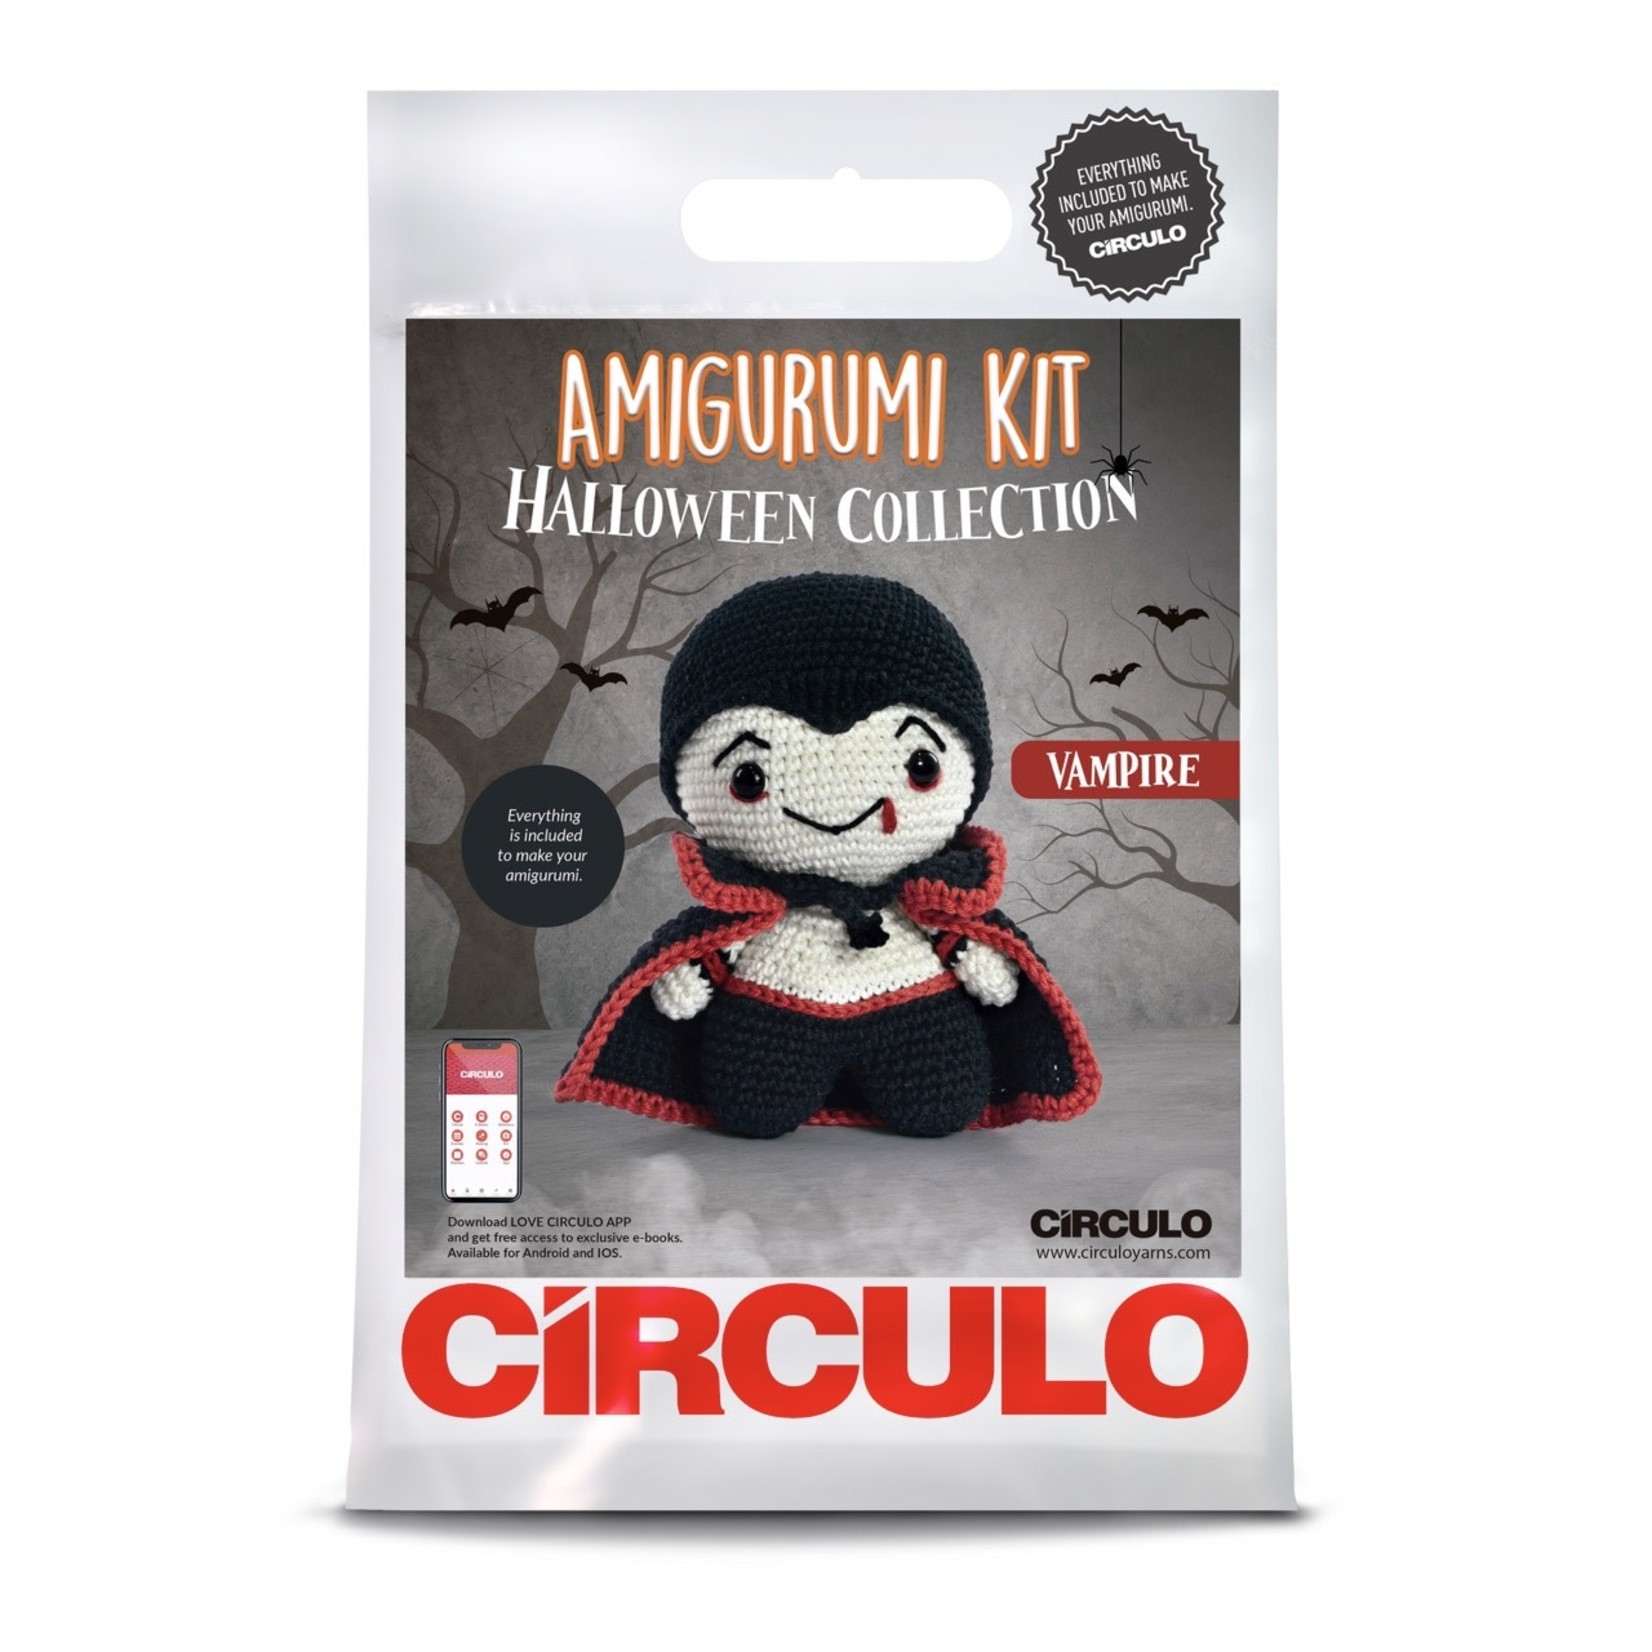 Circulo Amigurumi Kit Vampire